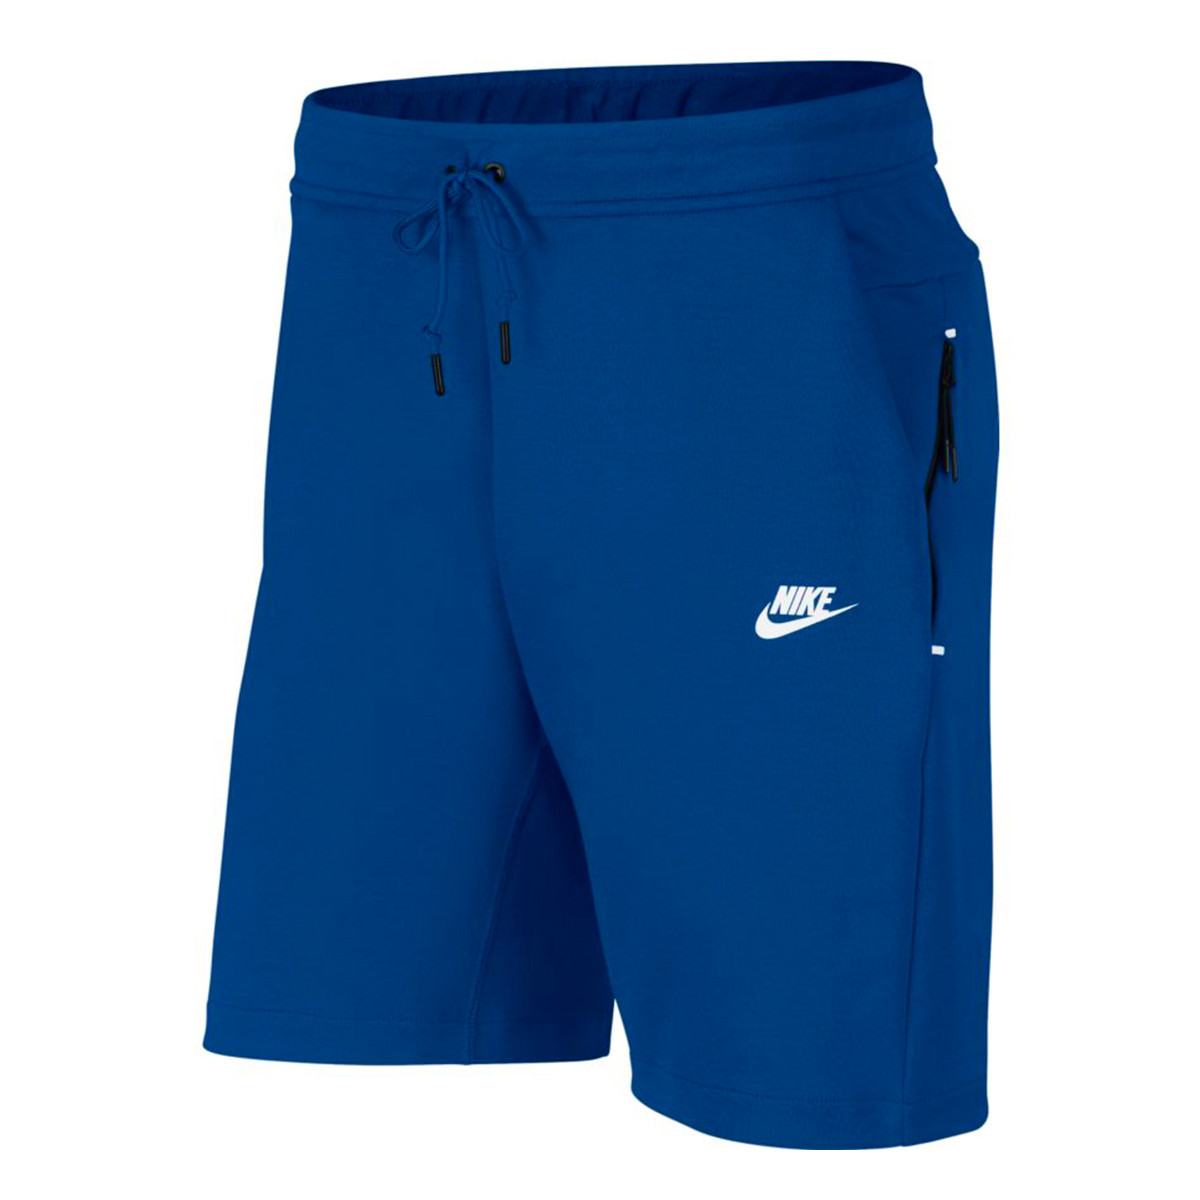 Pantalón corto Nike Sportswear Tech Fleece 2019 Indigo force-White - Tienda  de fútbol Fútbol Emotion